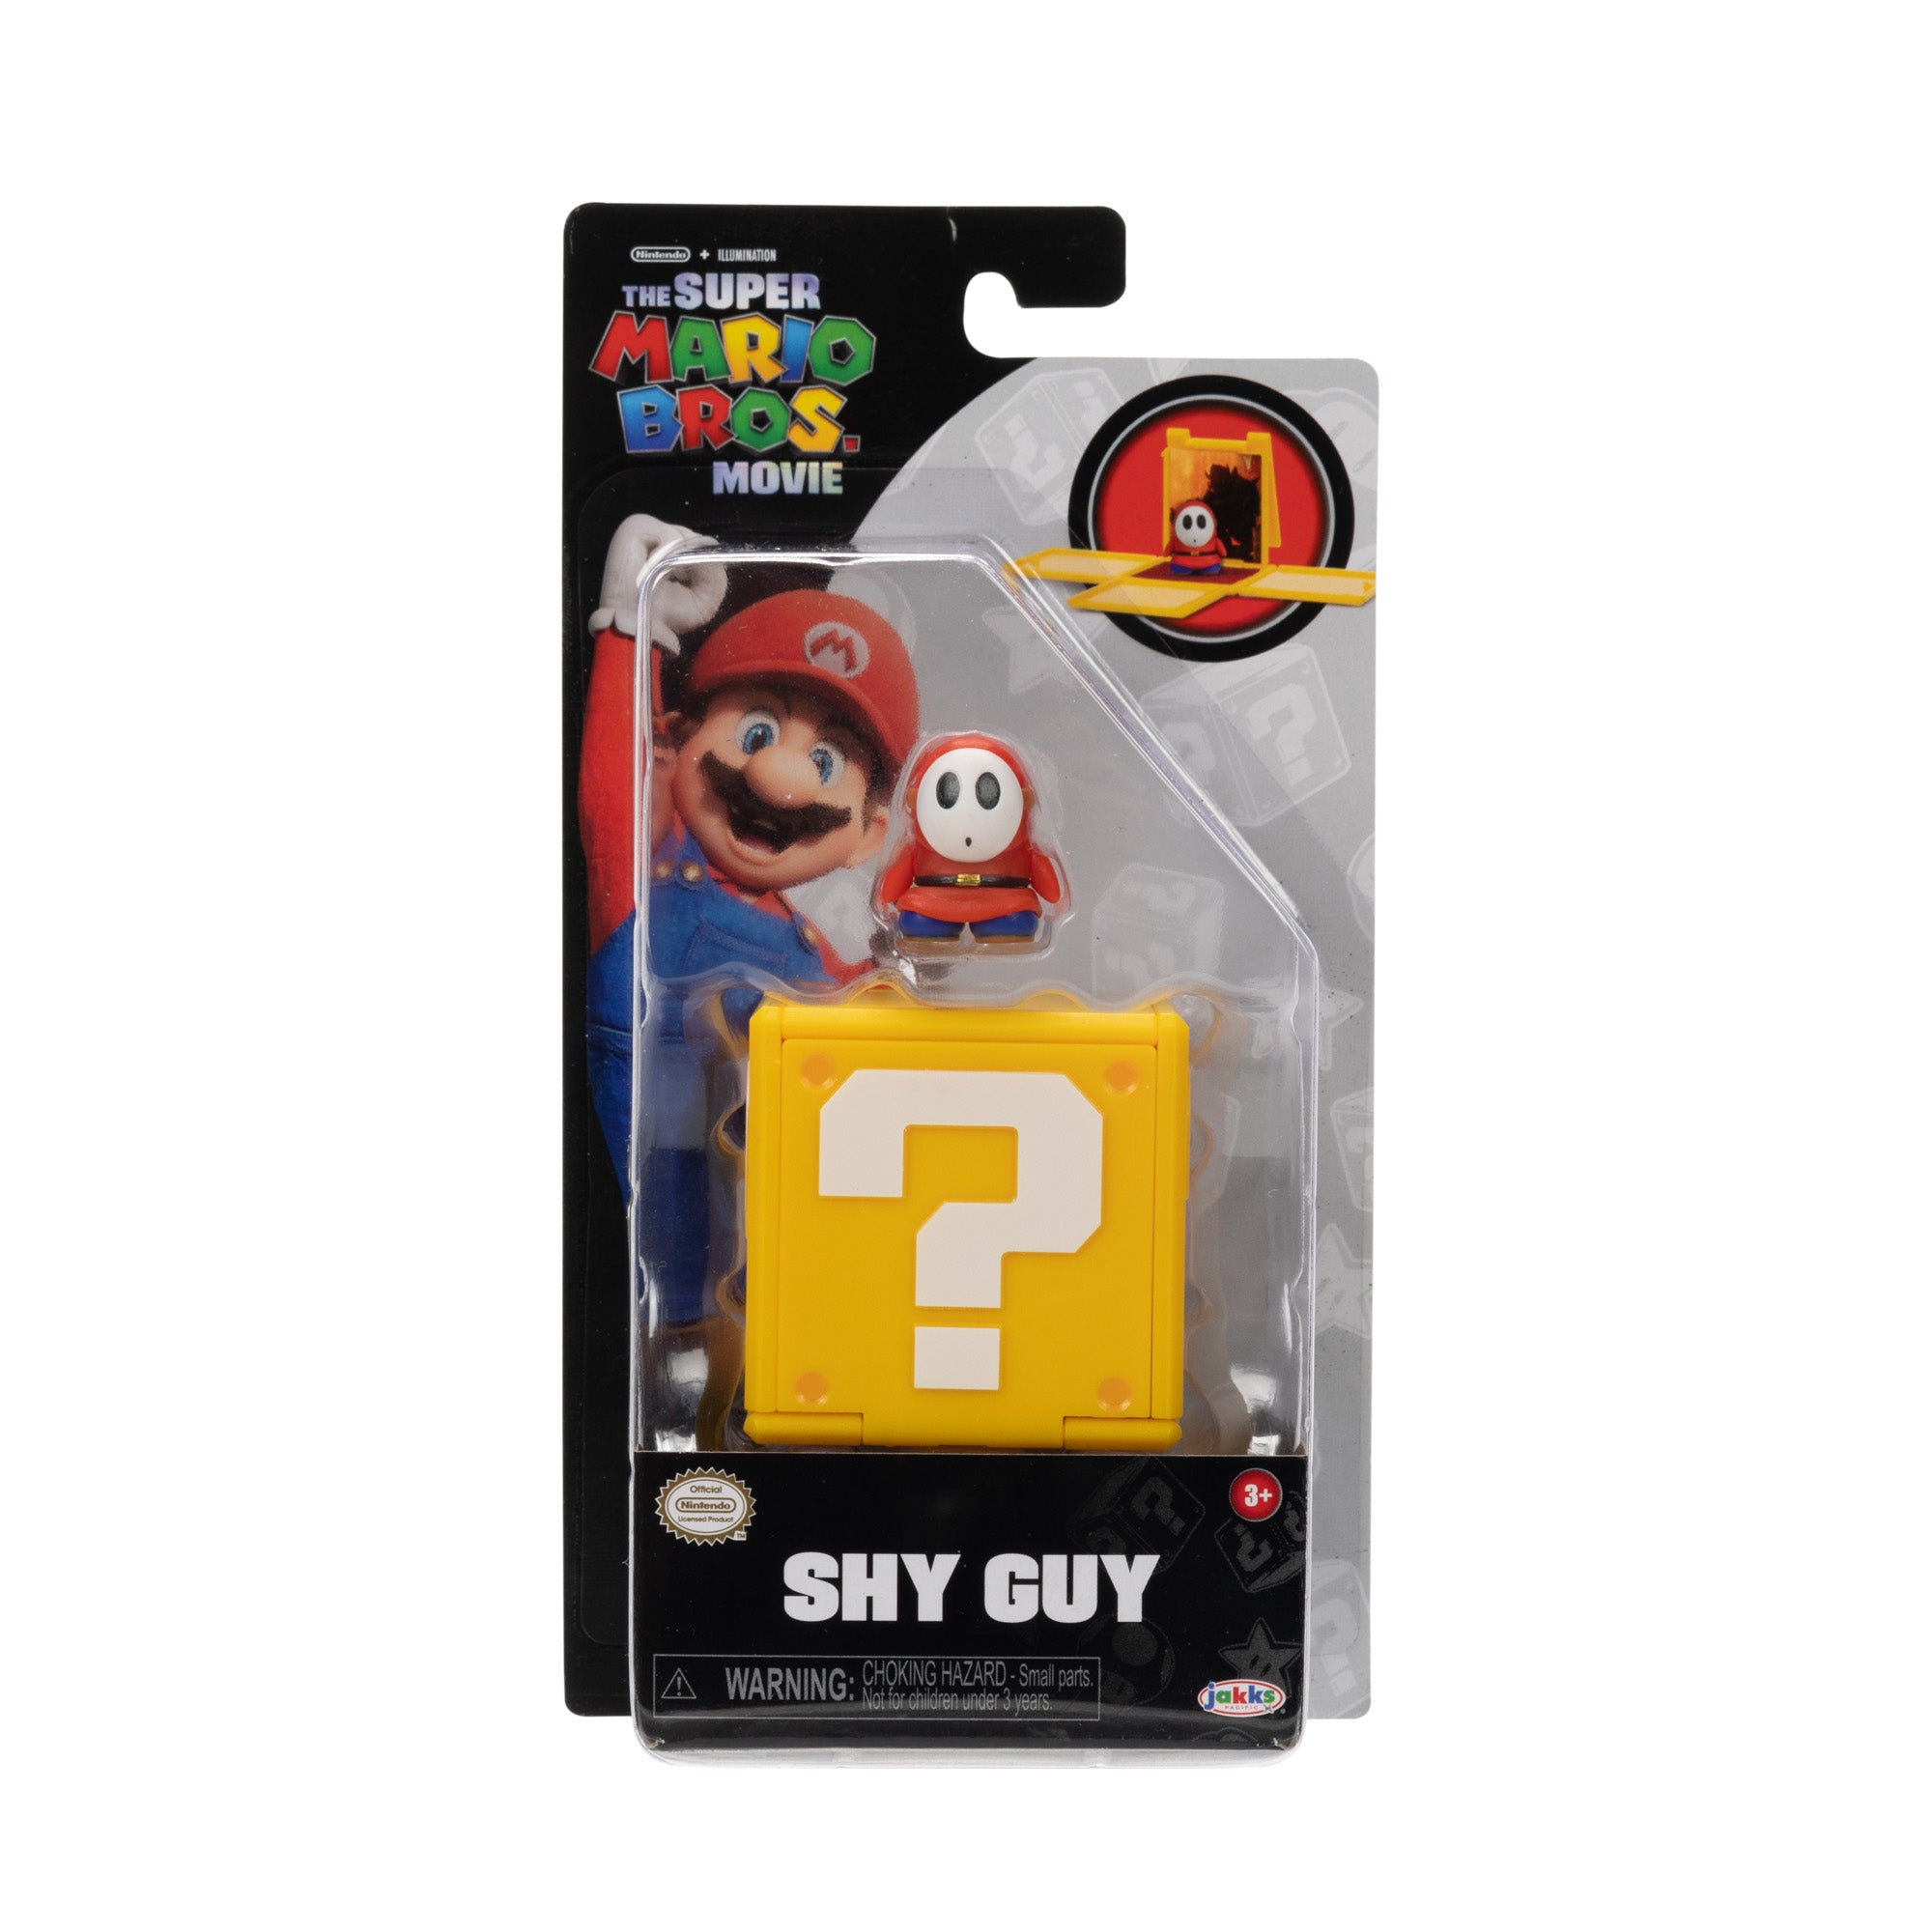 The Super Mario Bros. Movie - Shy Guy Mini Figure